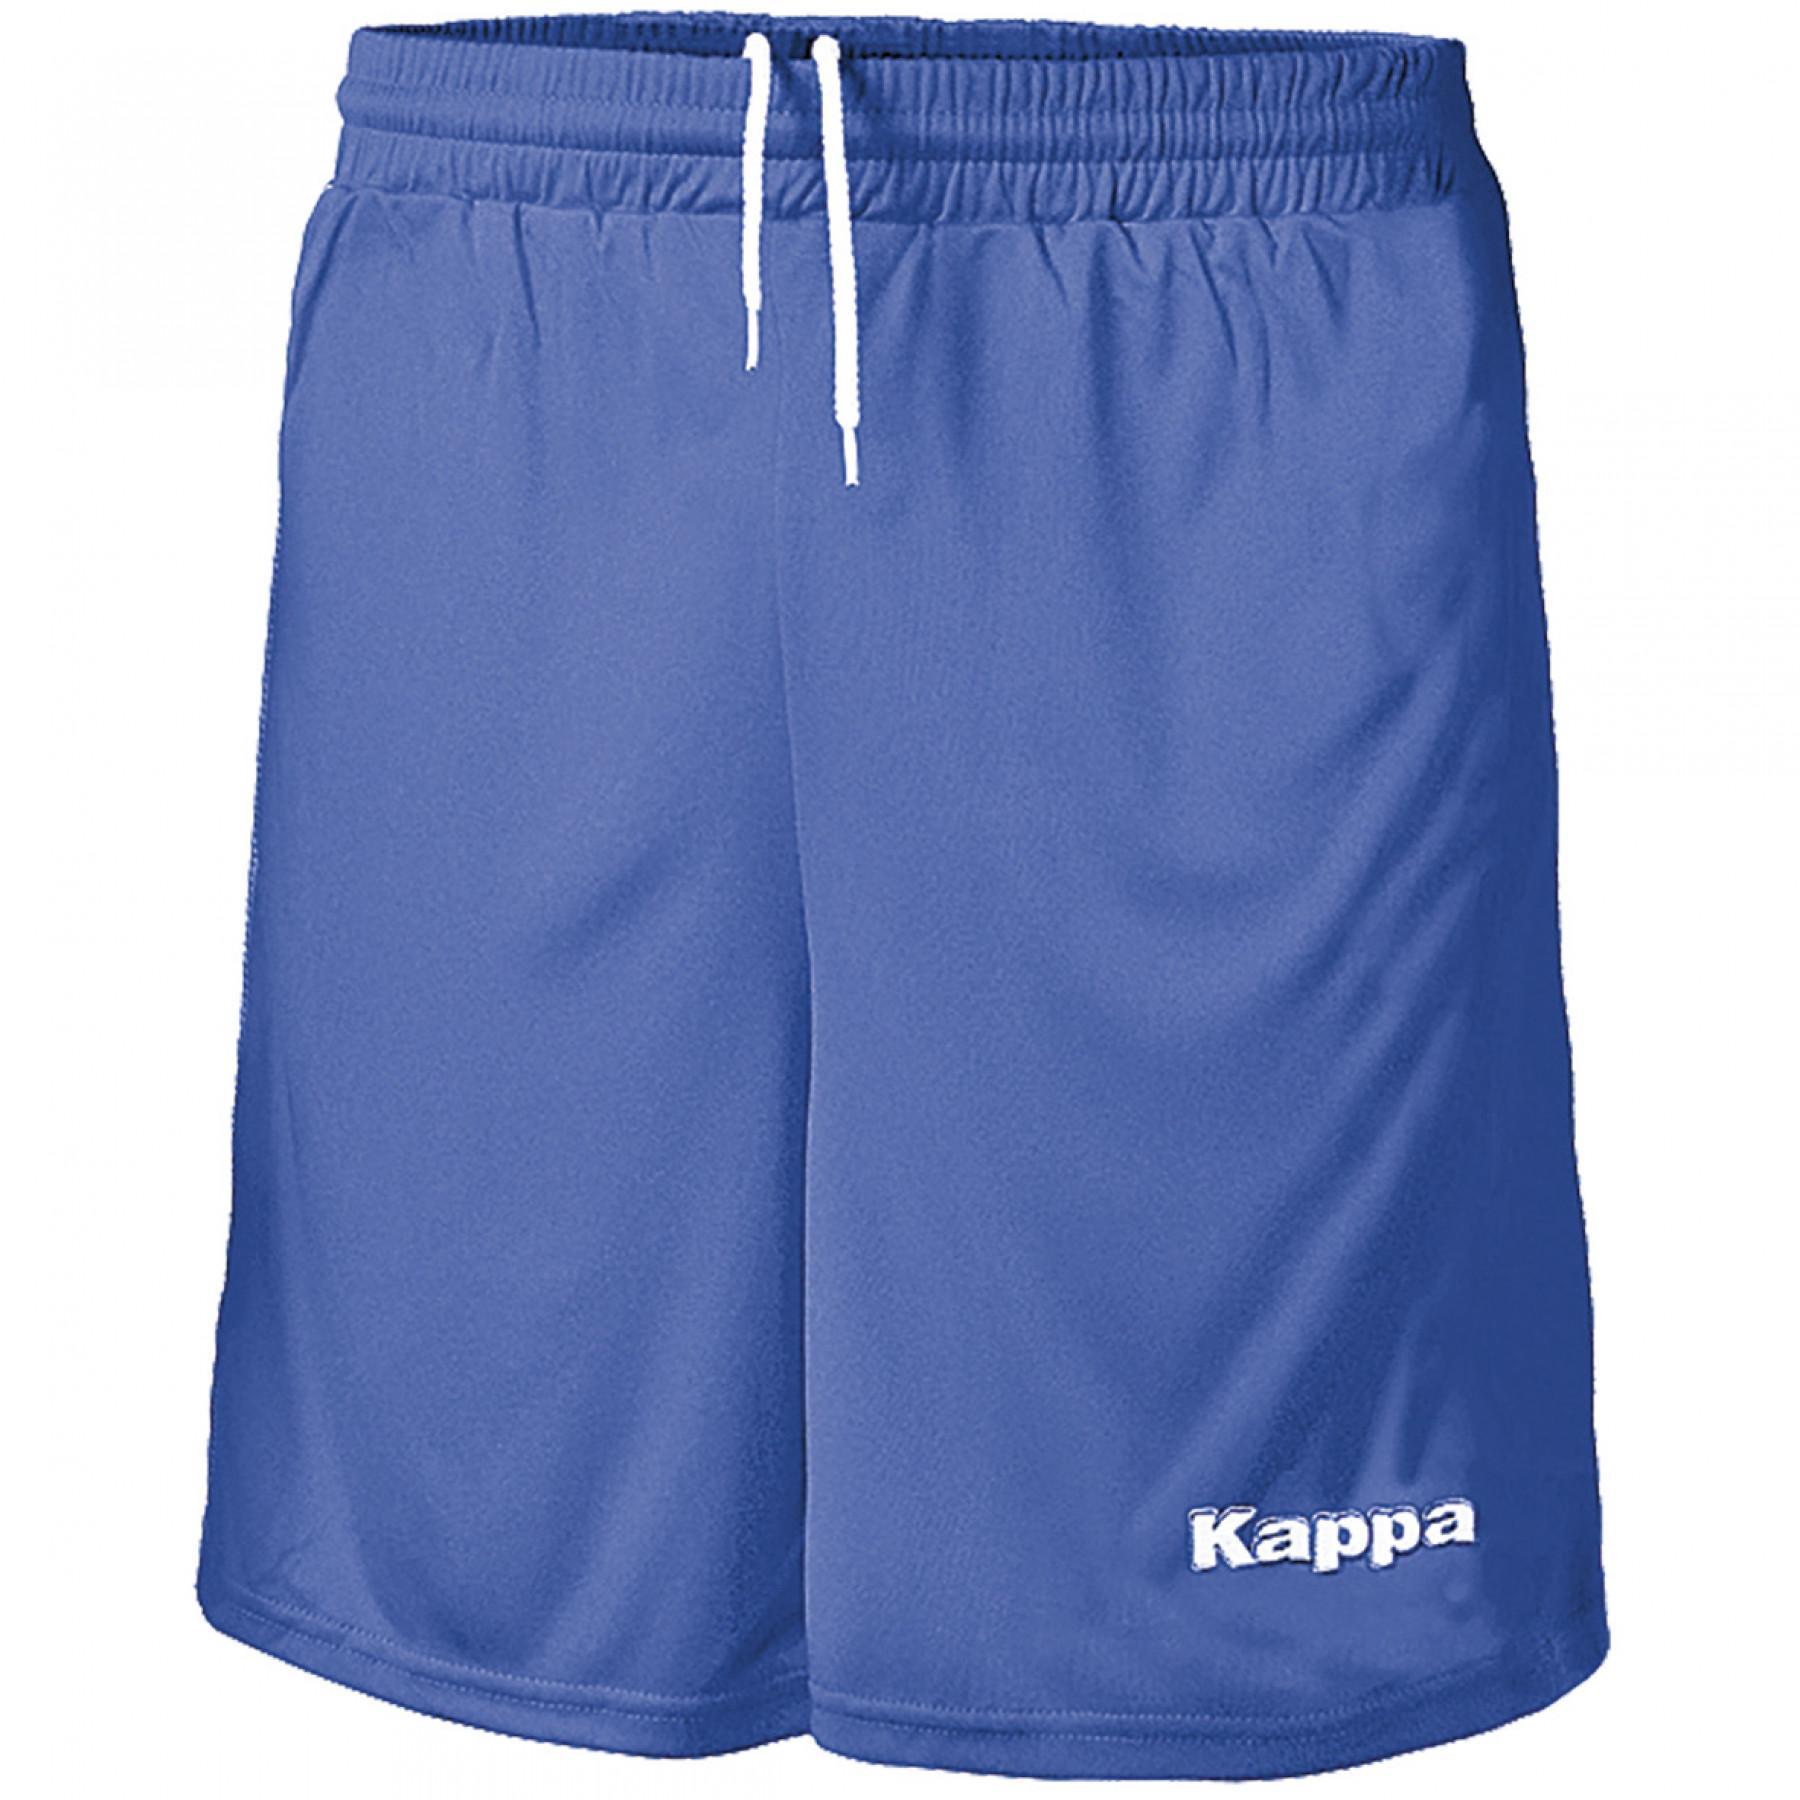 Pantaloncini per bambini Kappa Ribolla